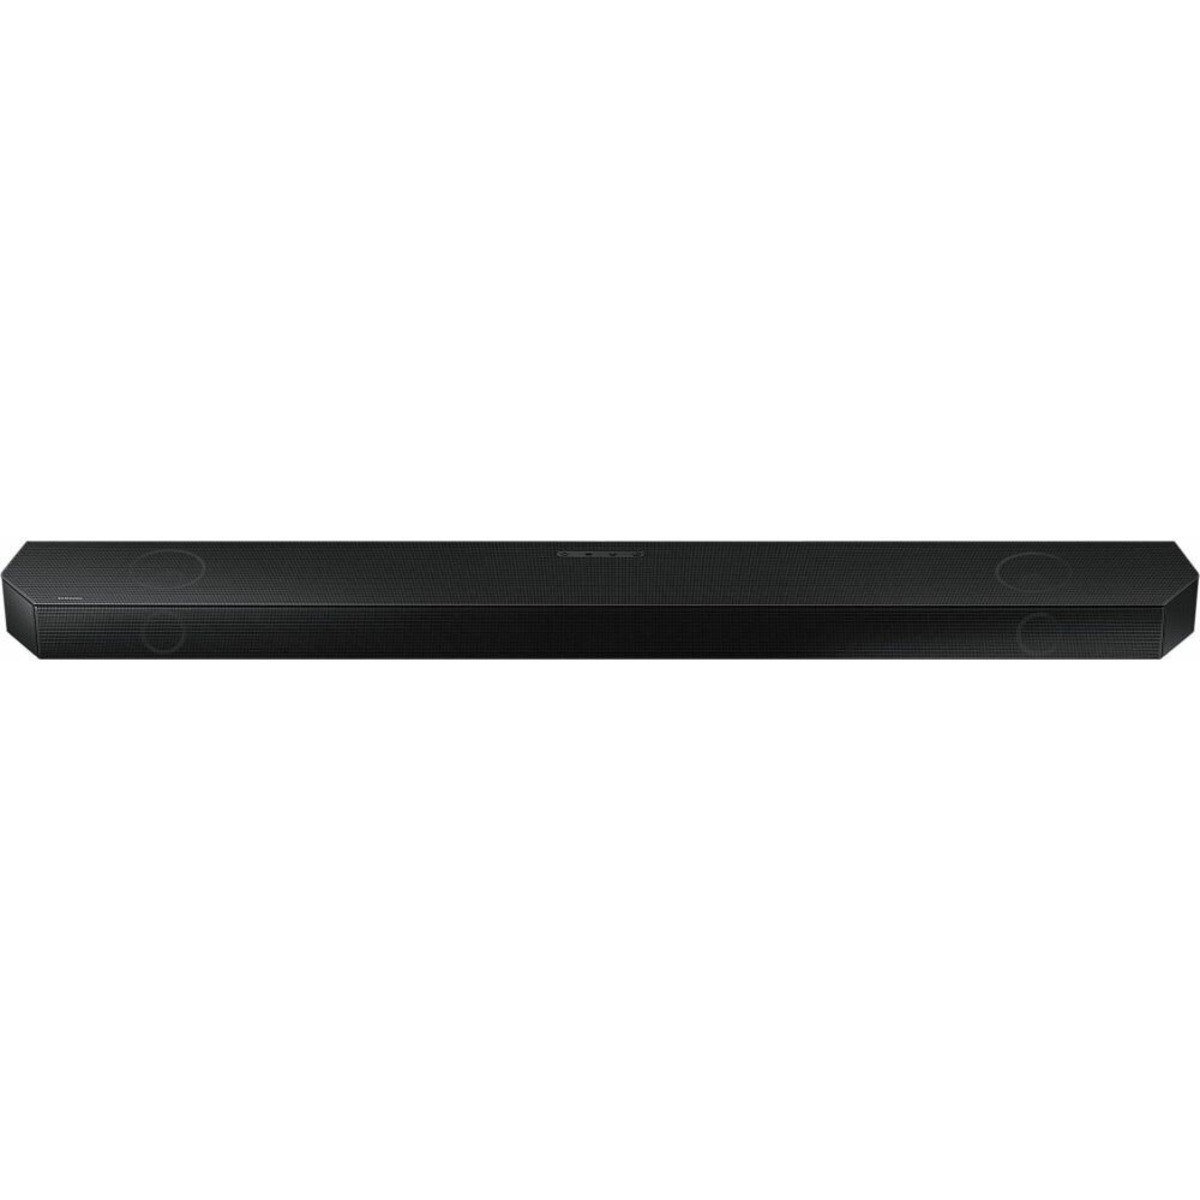 Саундбар Samsung HW-Q700B, черный